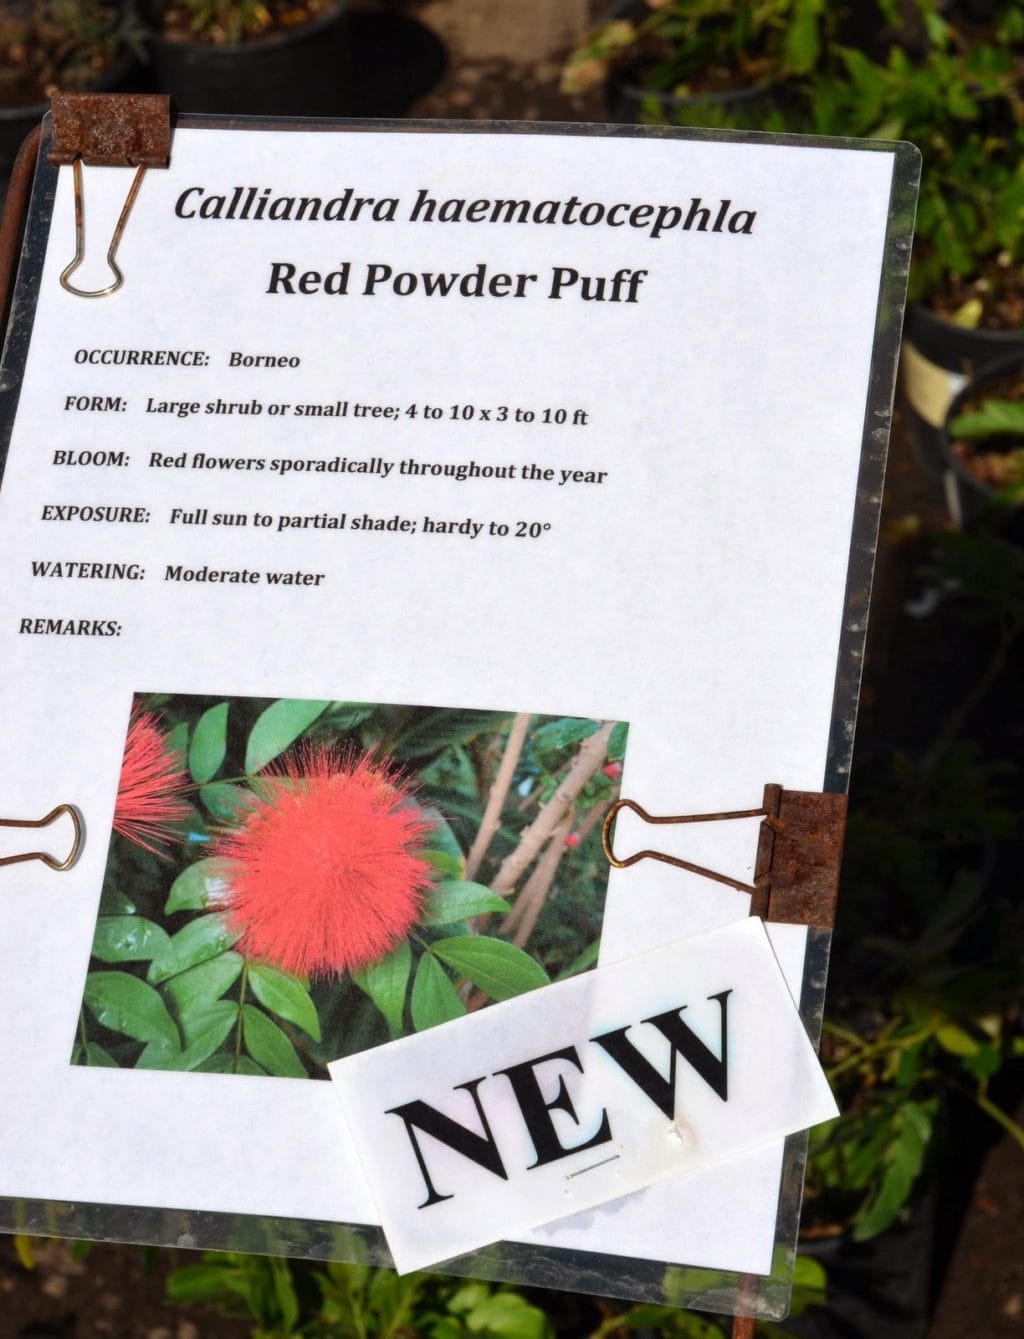 Red Powder Puff (Calliandra haematocephla)